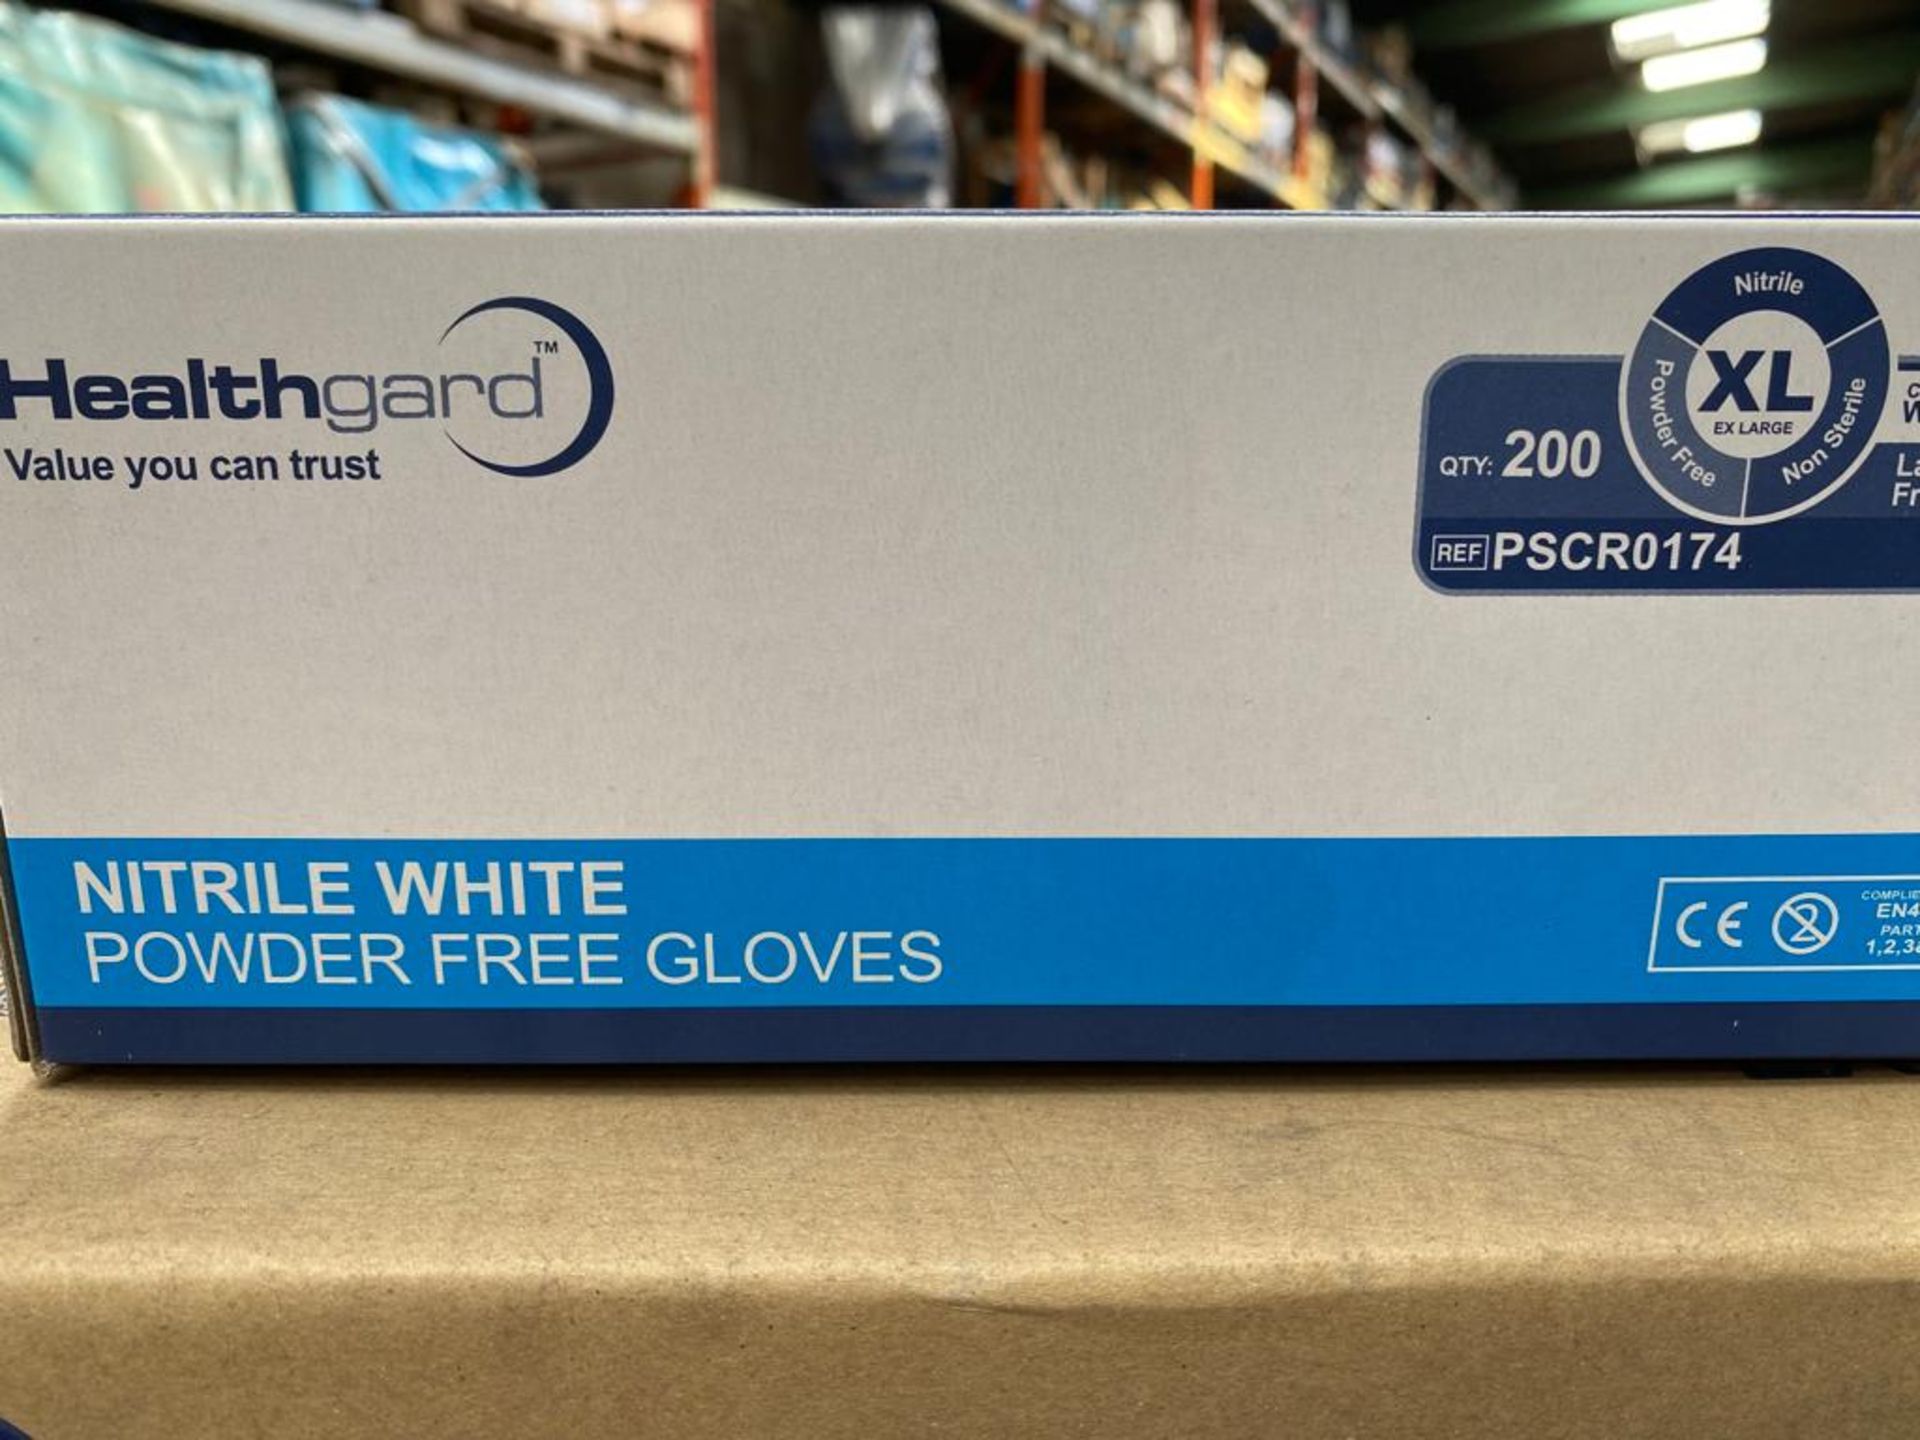 Three Boxes of Healthgard XL Nitrile White Powder Free Gloves, ten packs per box, 200 gloves per - Image 2 of 2